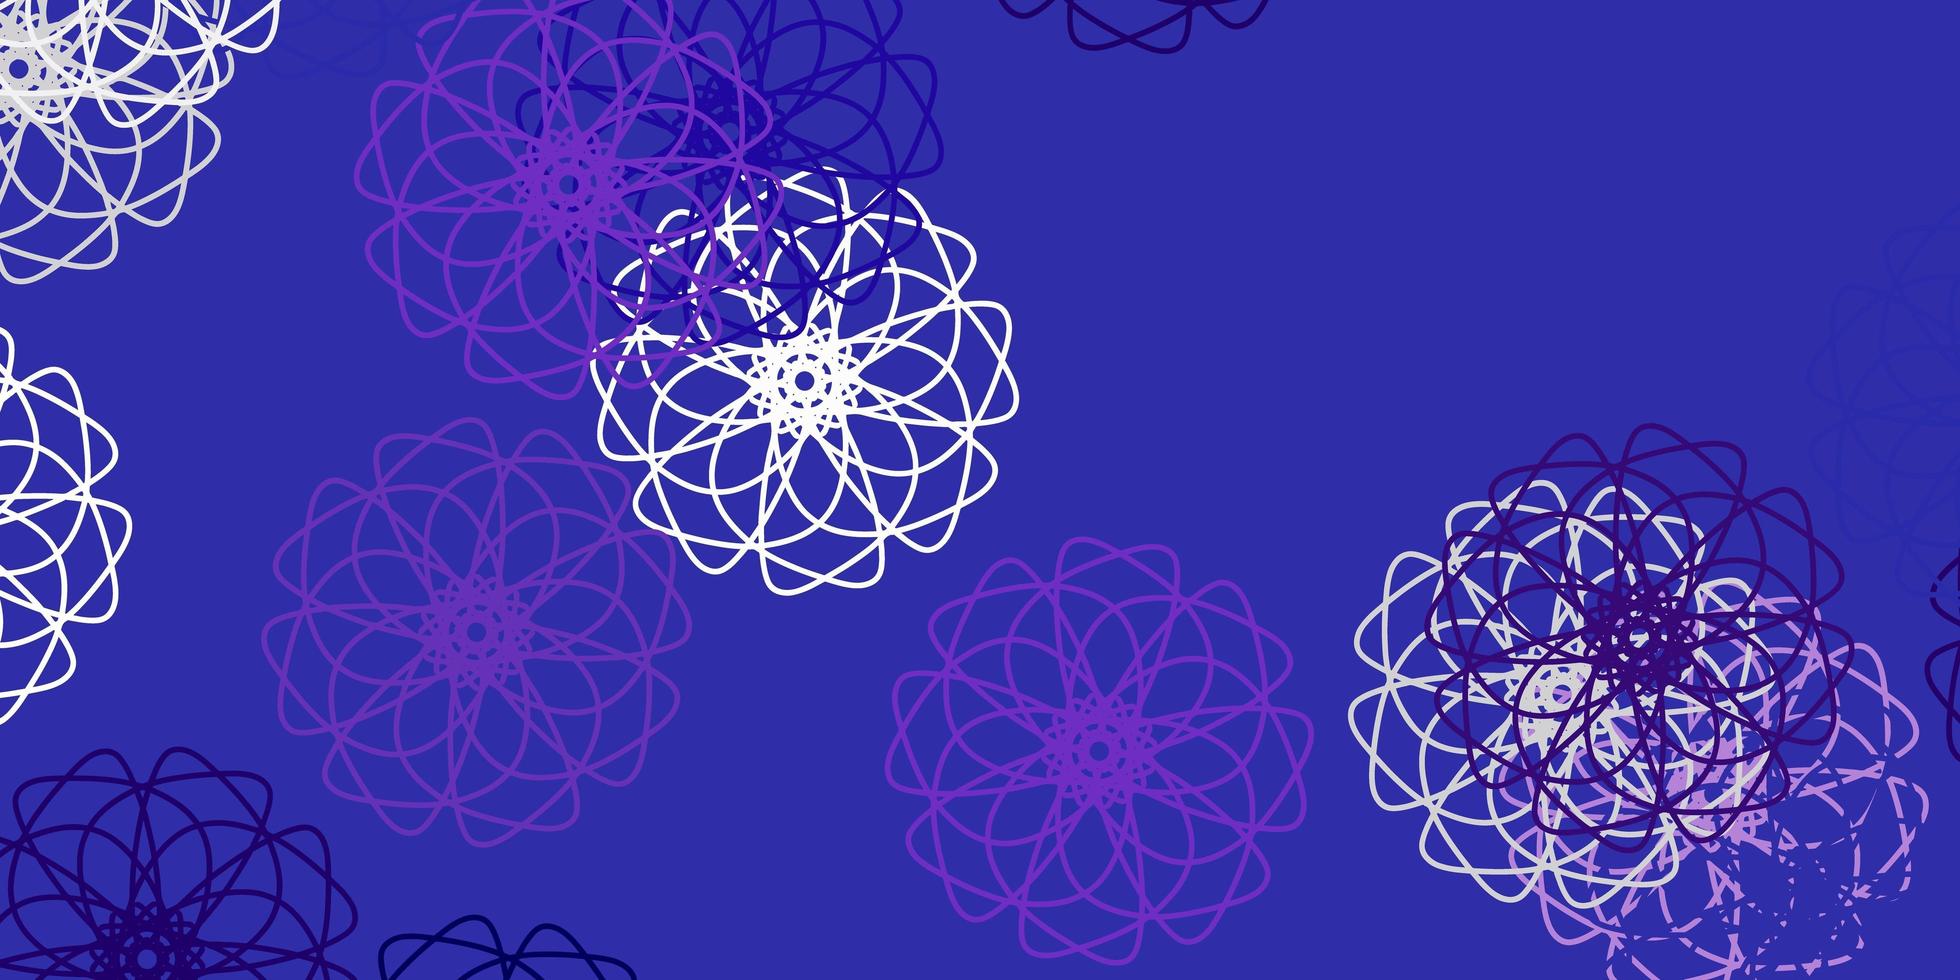 ljuslila vektor doodle textur med blommor.